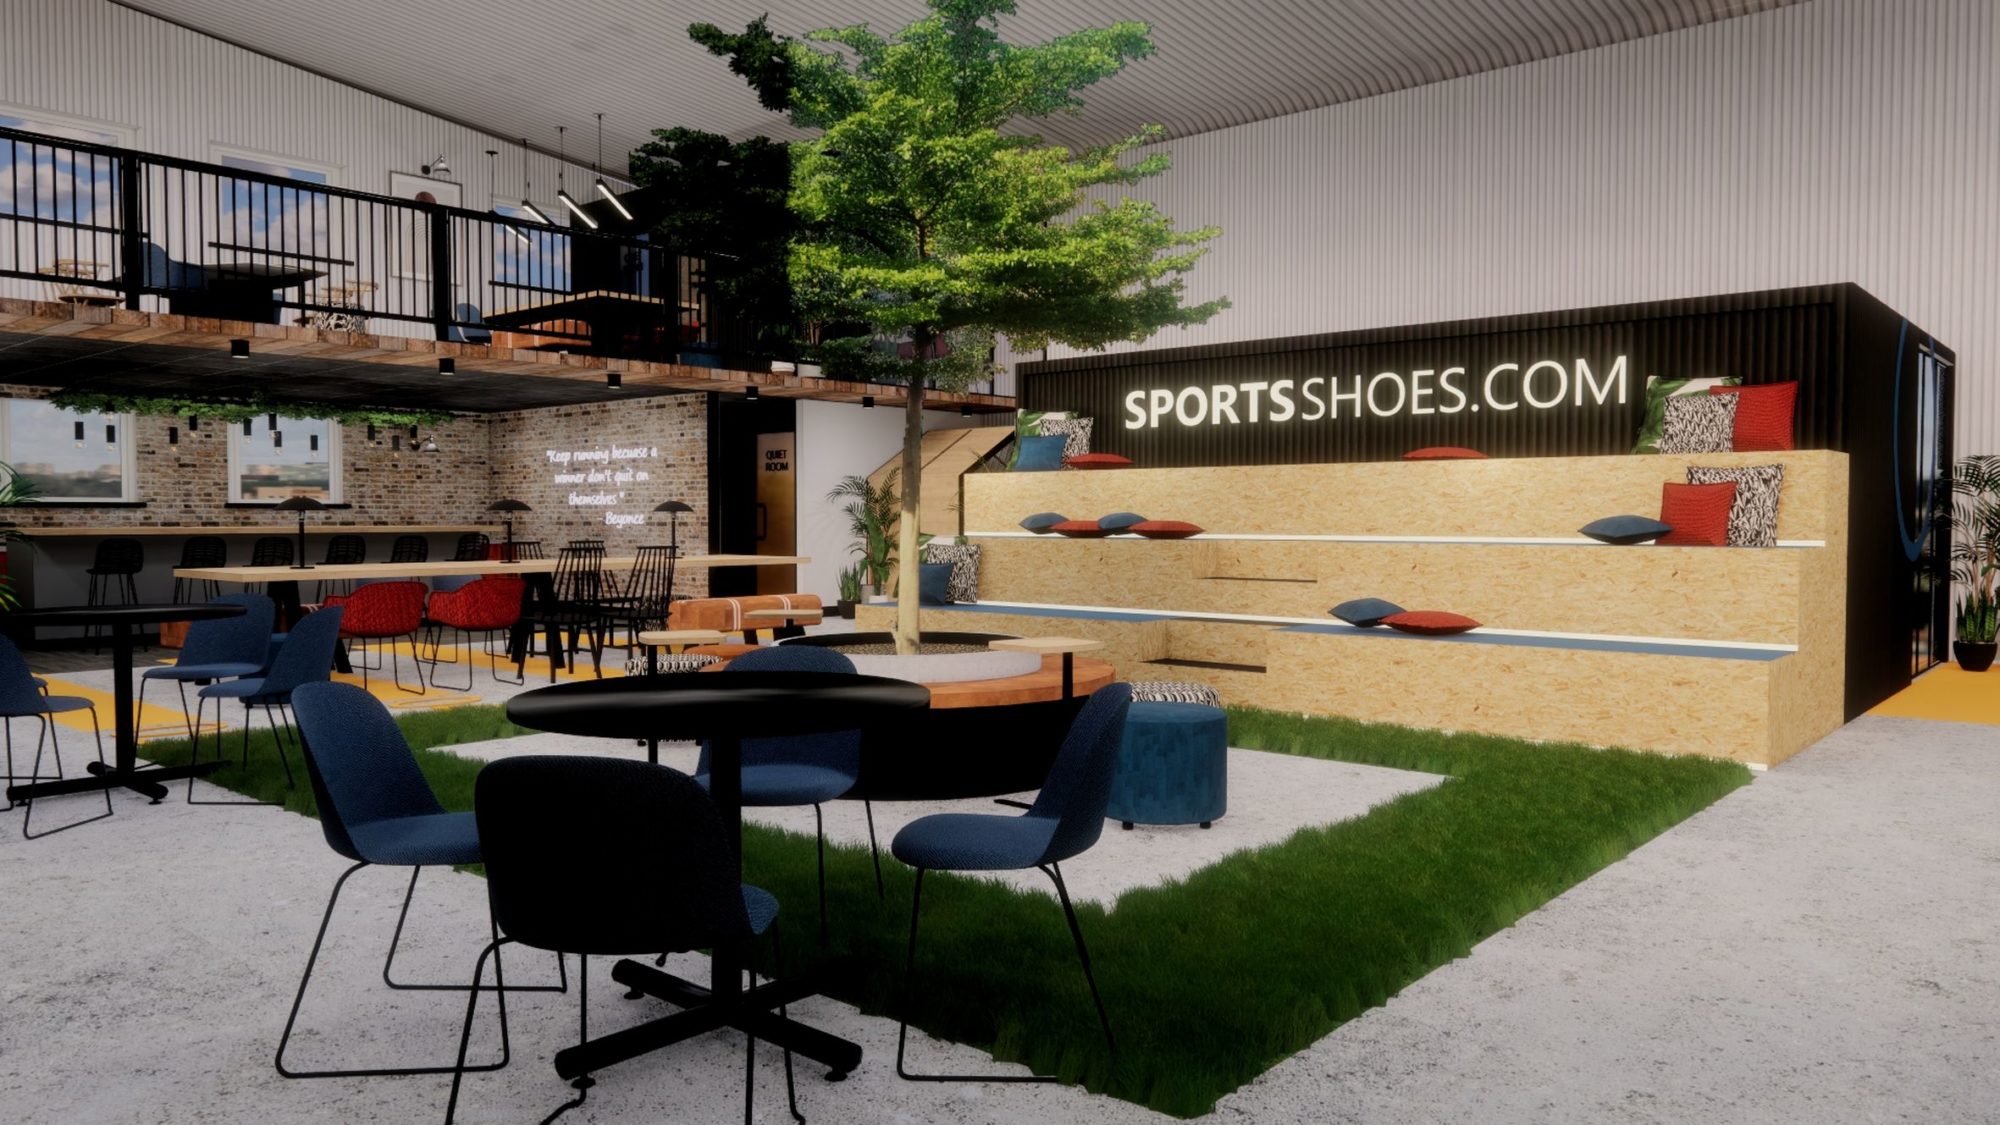 SportsShoes.com announces £2.5m investment in creative & tech hub